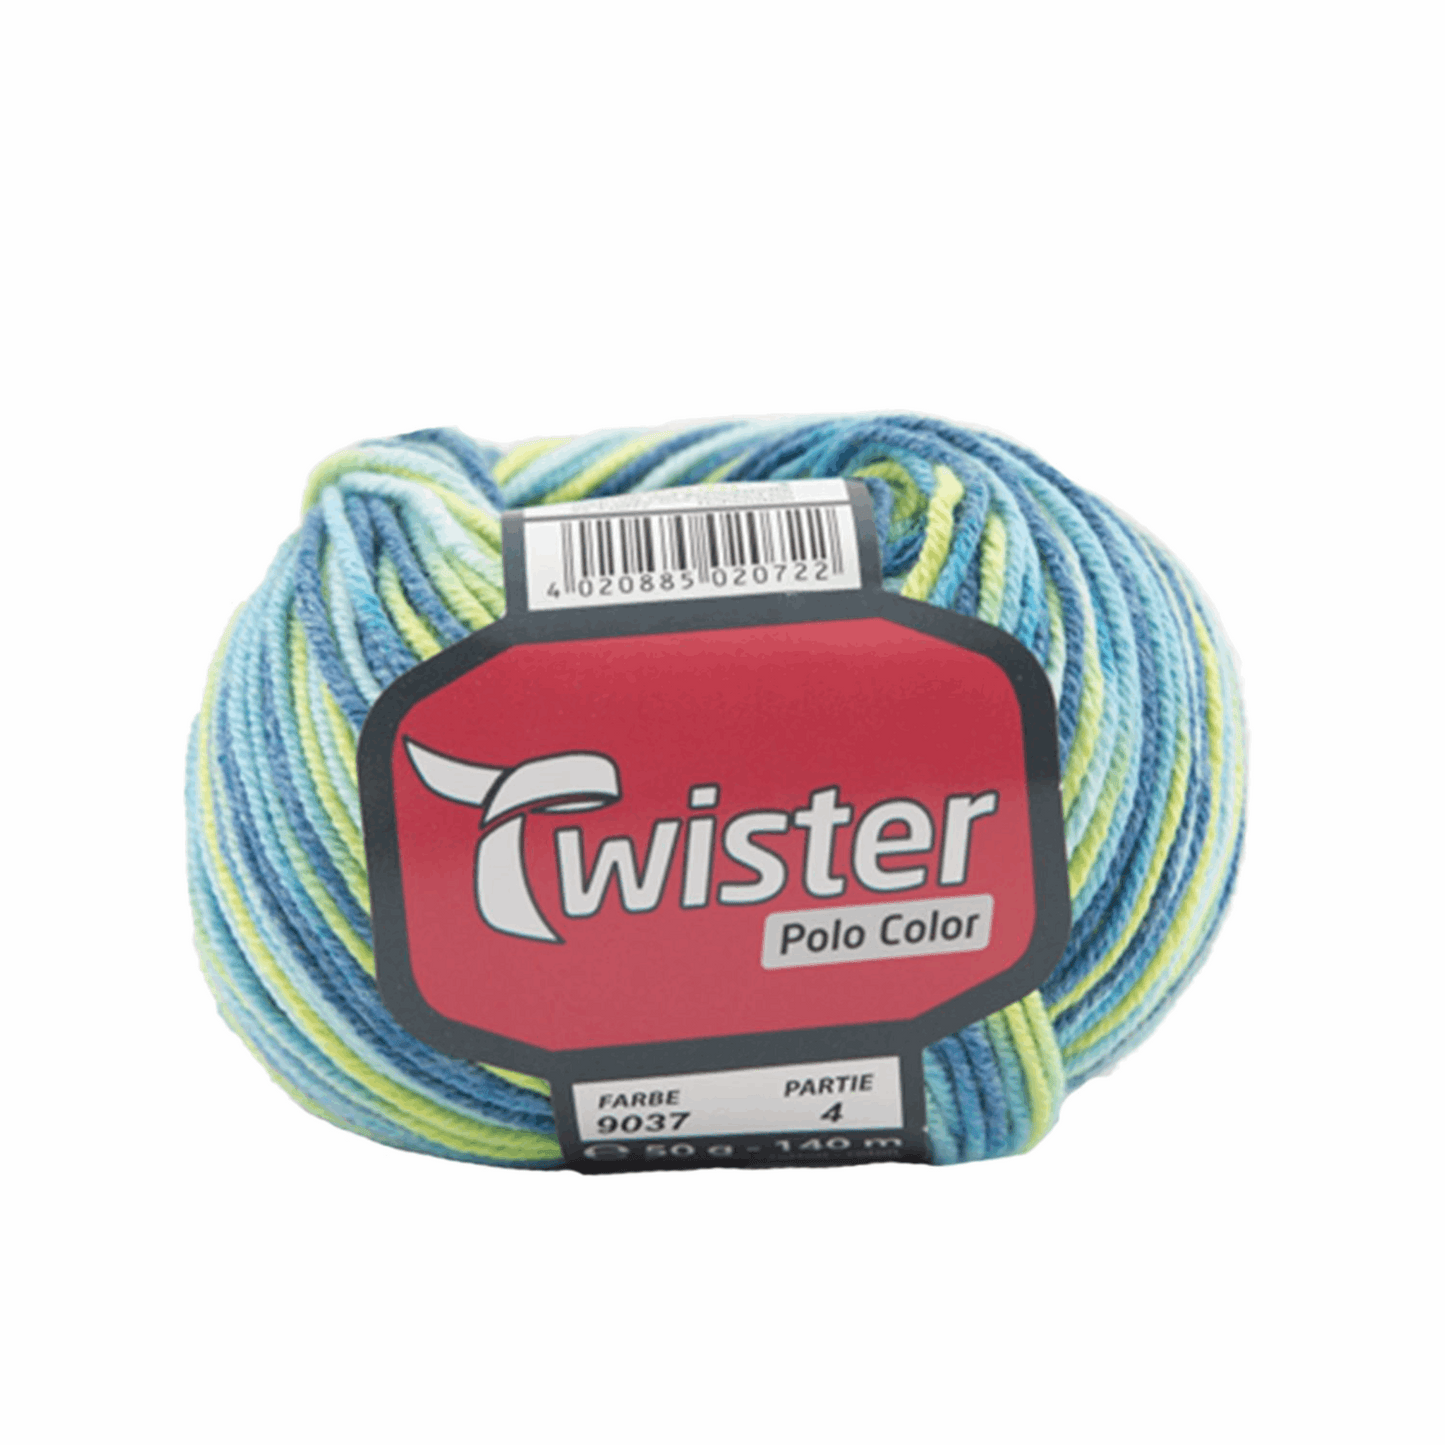 Twister Polo color, 50g, 98331, Farbe mint/bleu/bl 9037